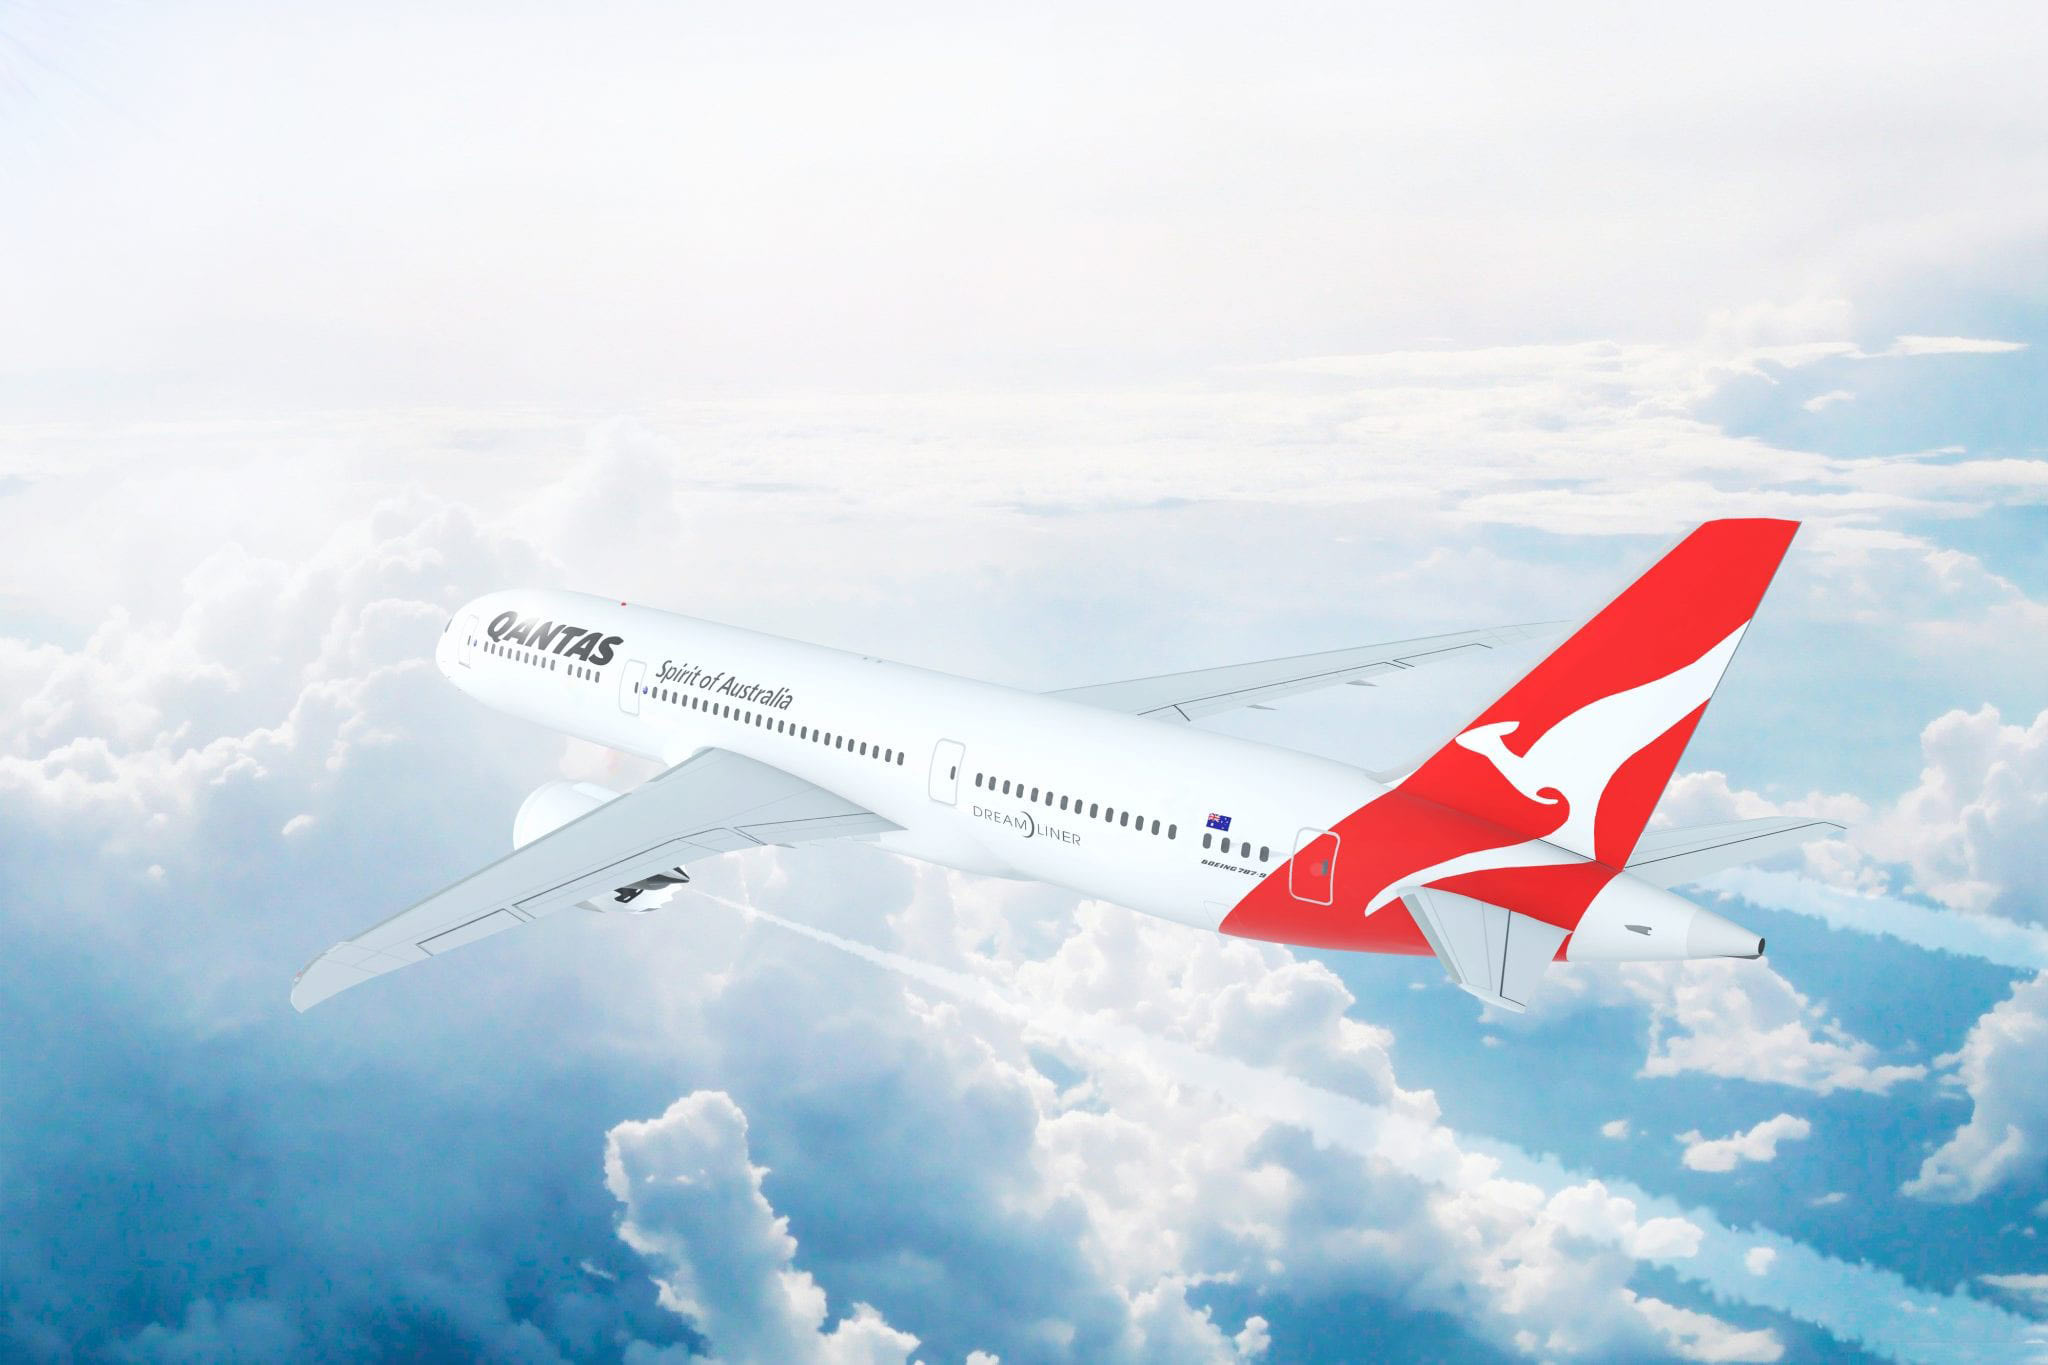 Qantas. Photo: NextNewMedia / Shutterstock.com